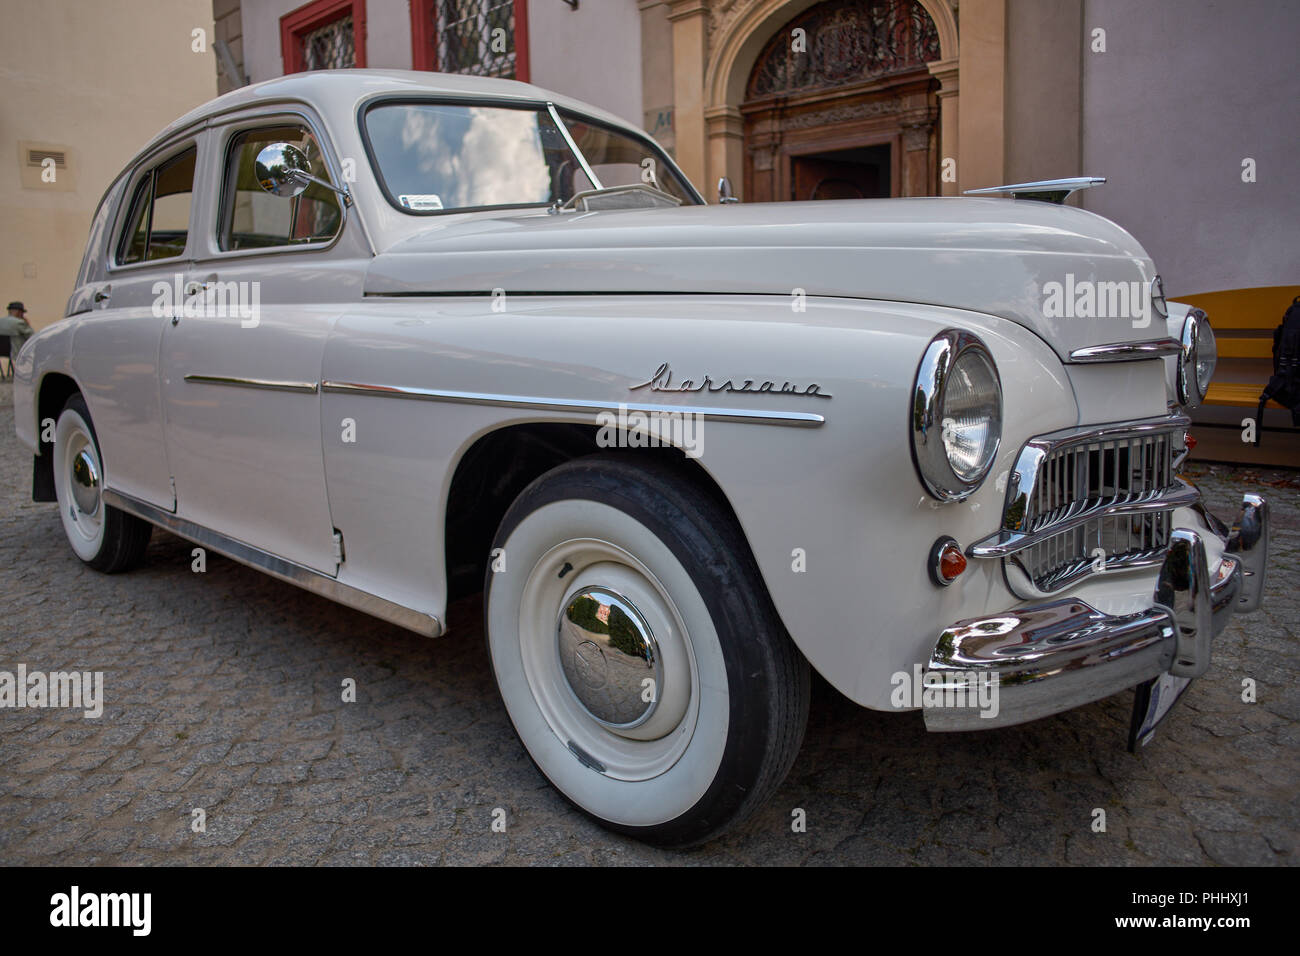 White vintage car Warszawa Stock Photo